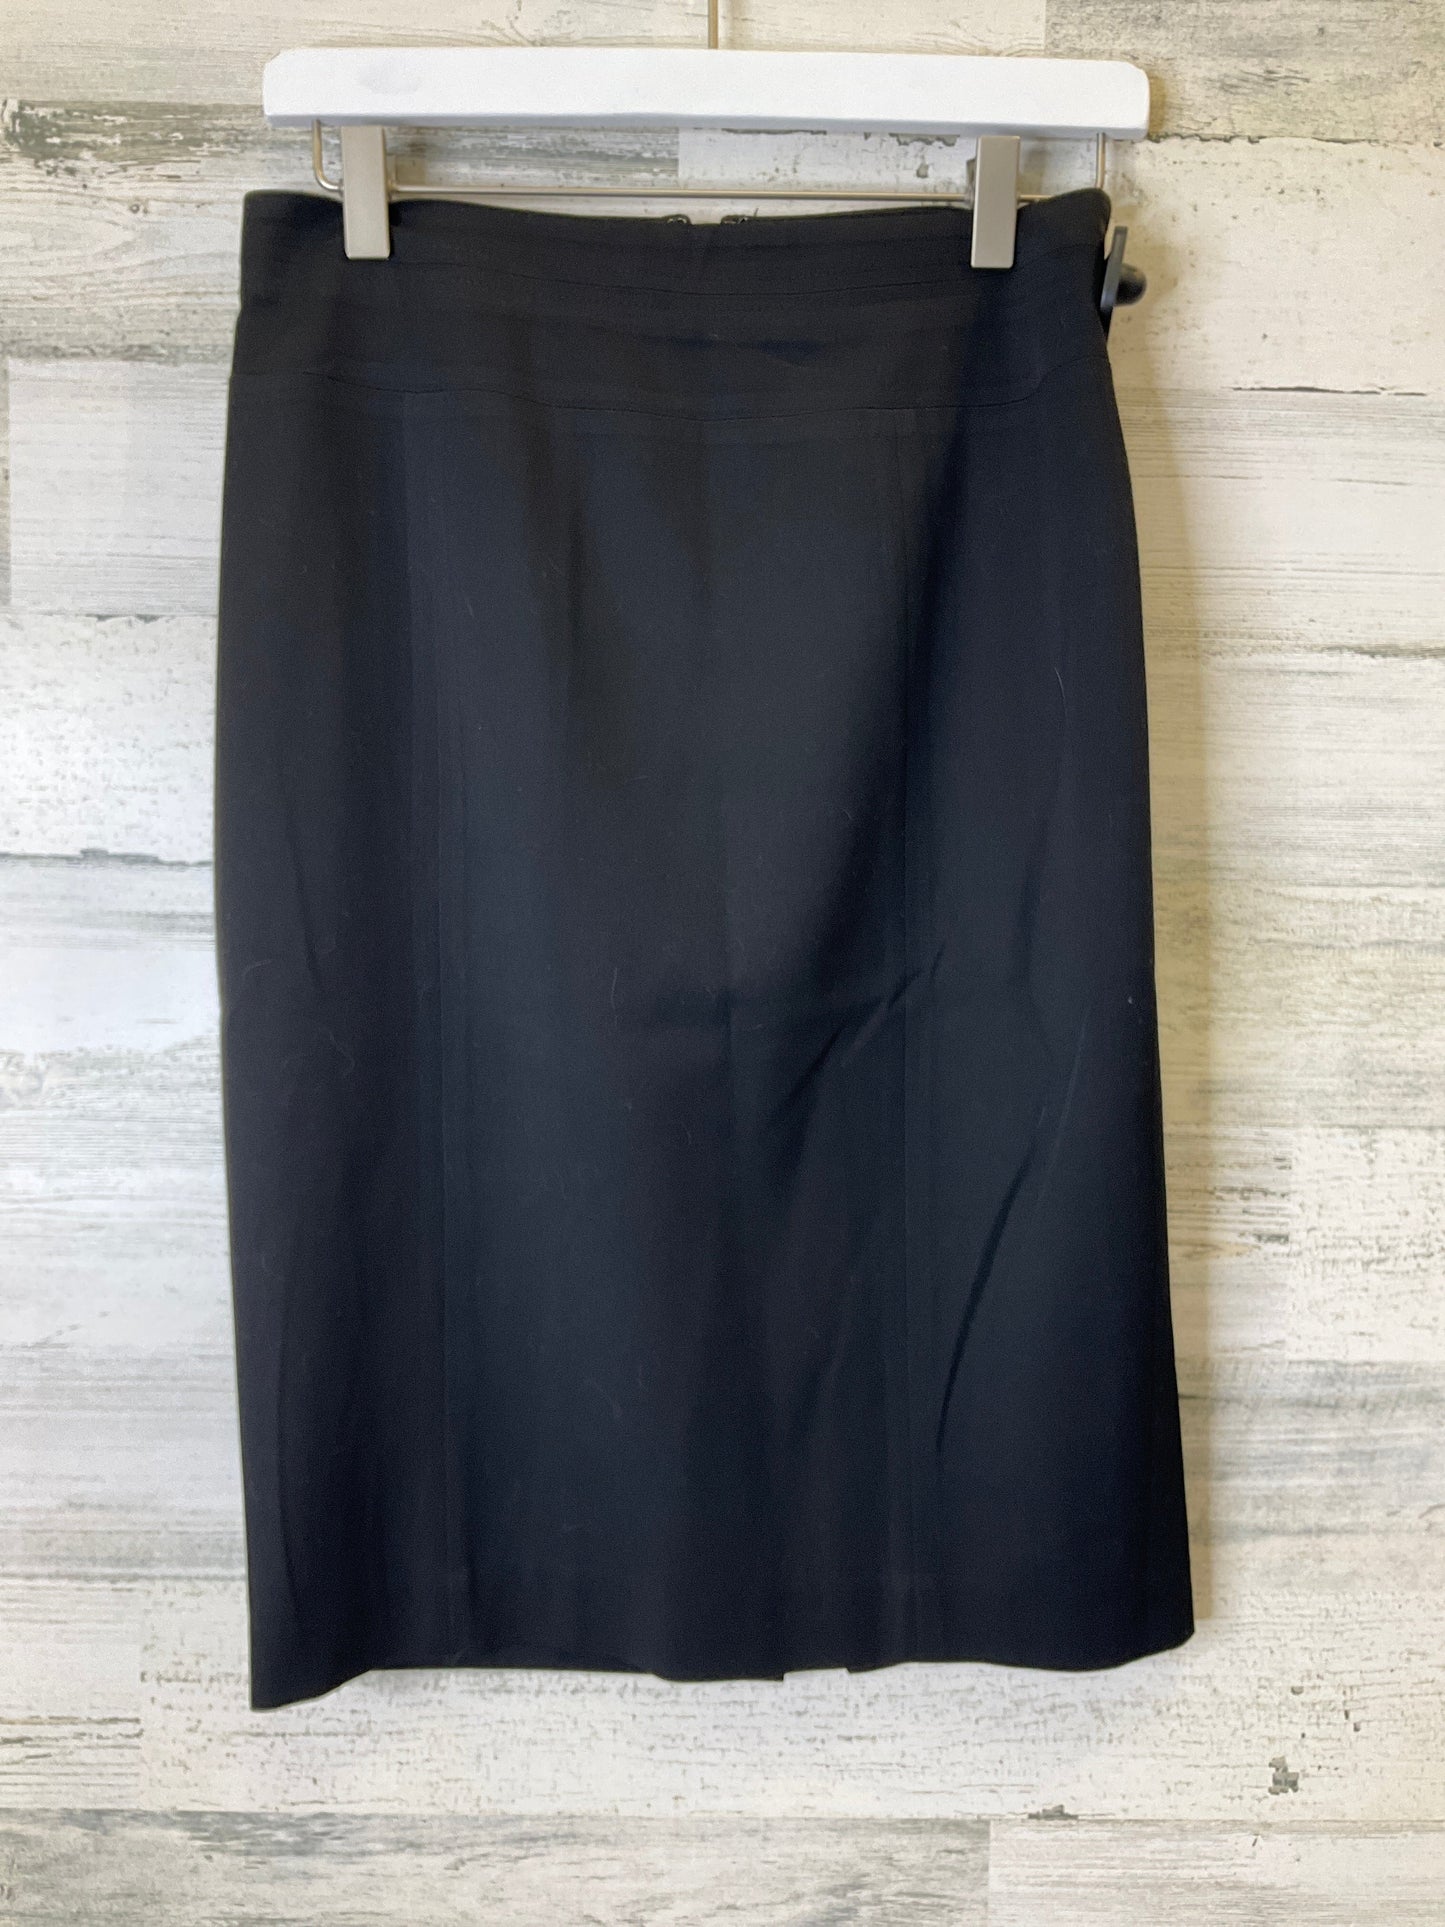 Skirt Midi By White House Black Market  Size: 2